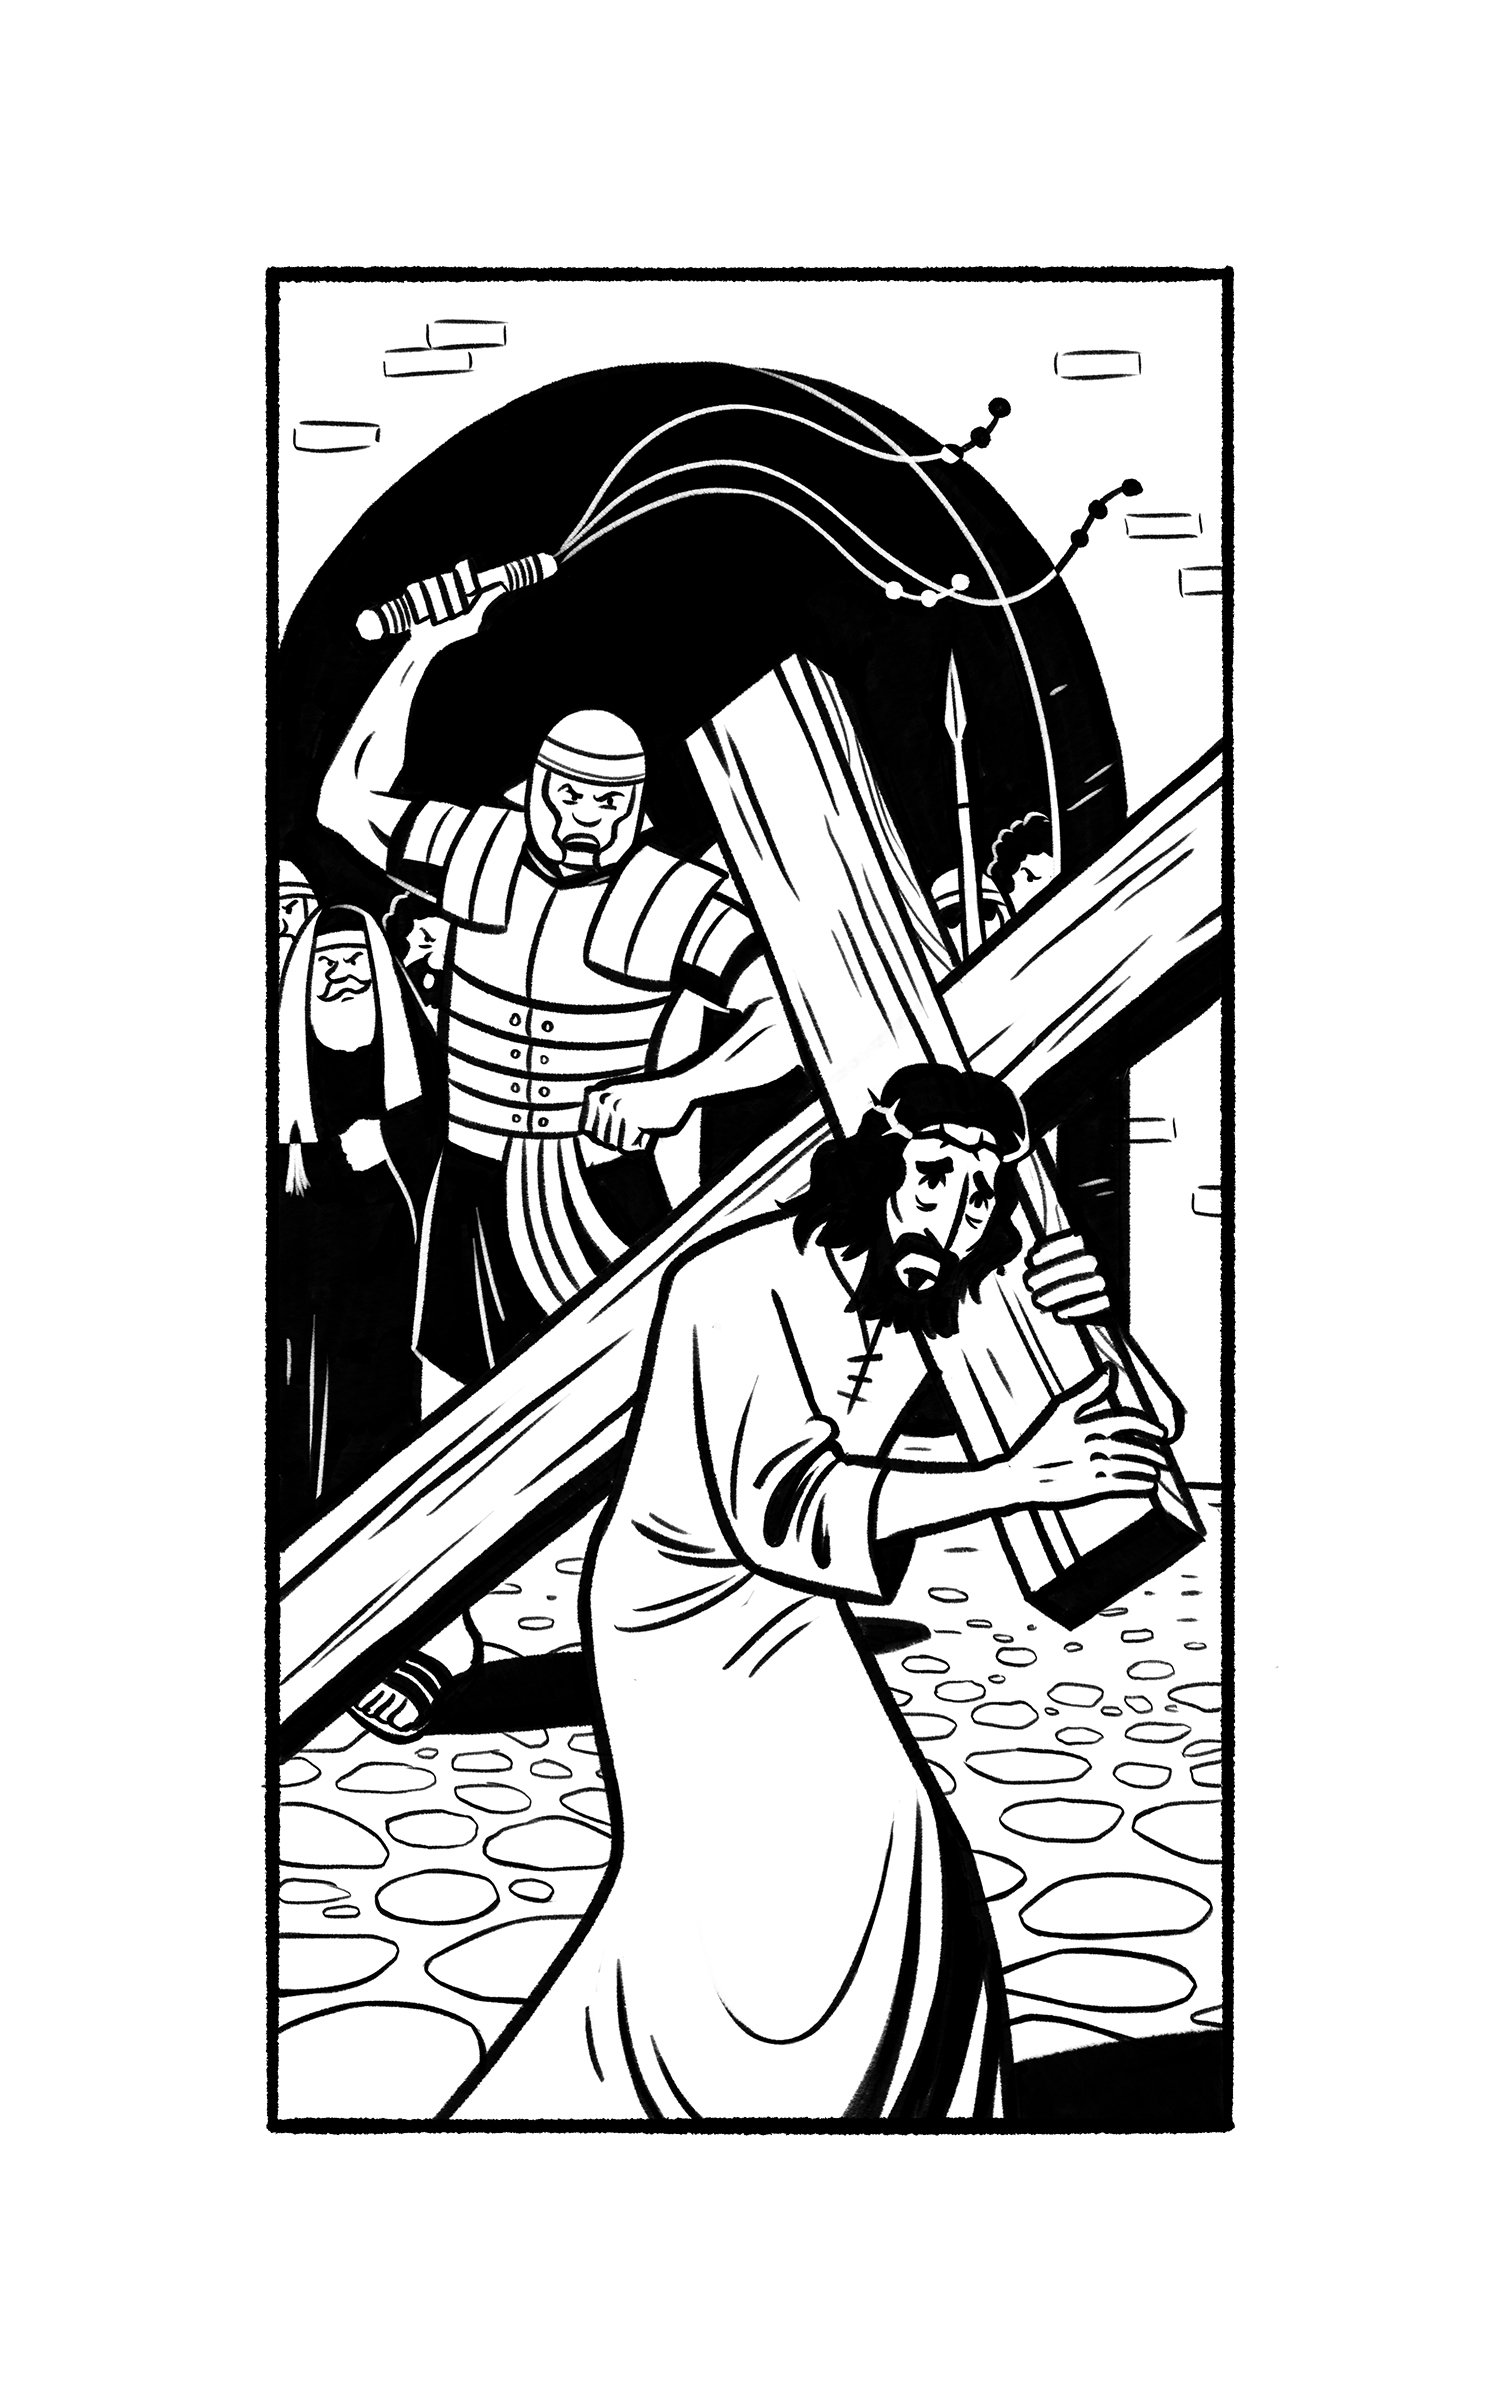 Jesus carries His cross